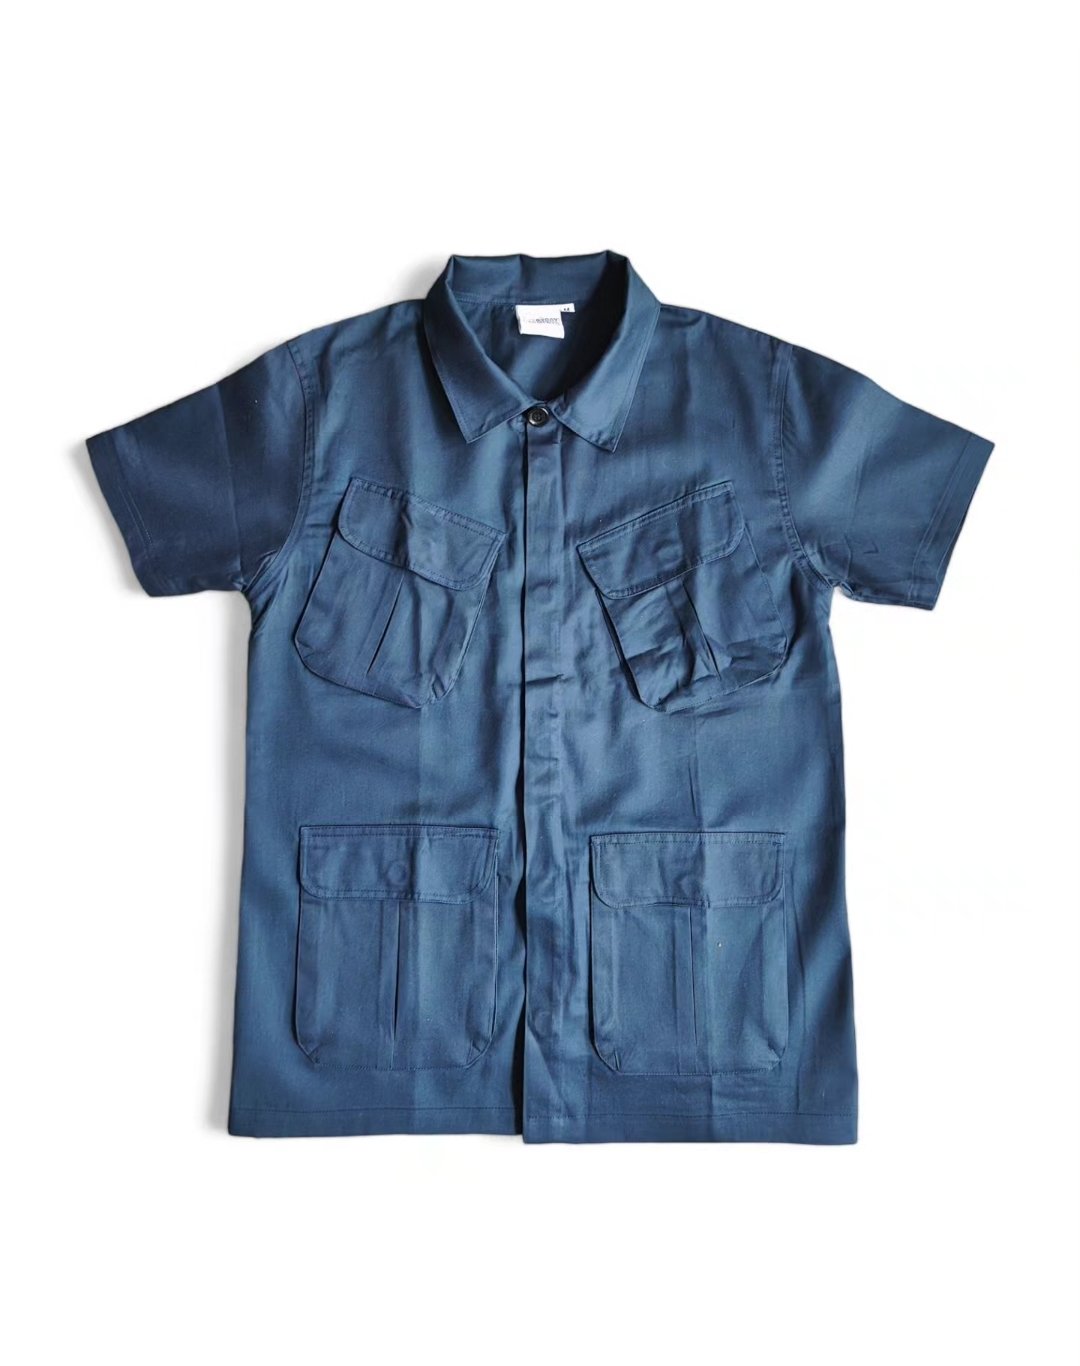 Image of Everyday Garments "AFAN" Short Sleeve Shirts 